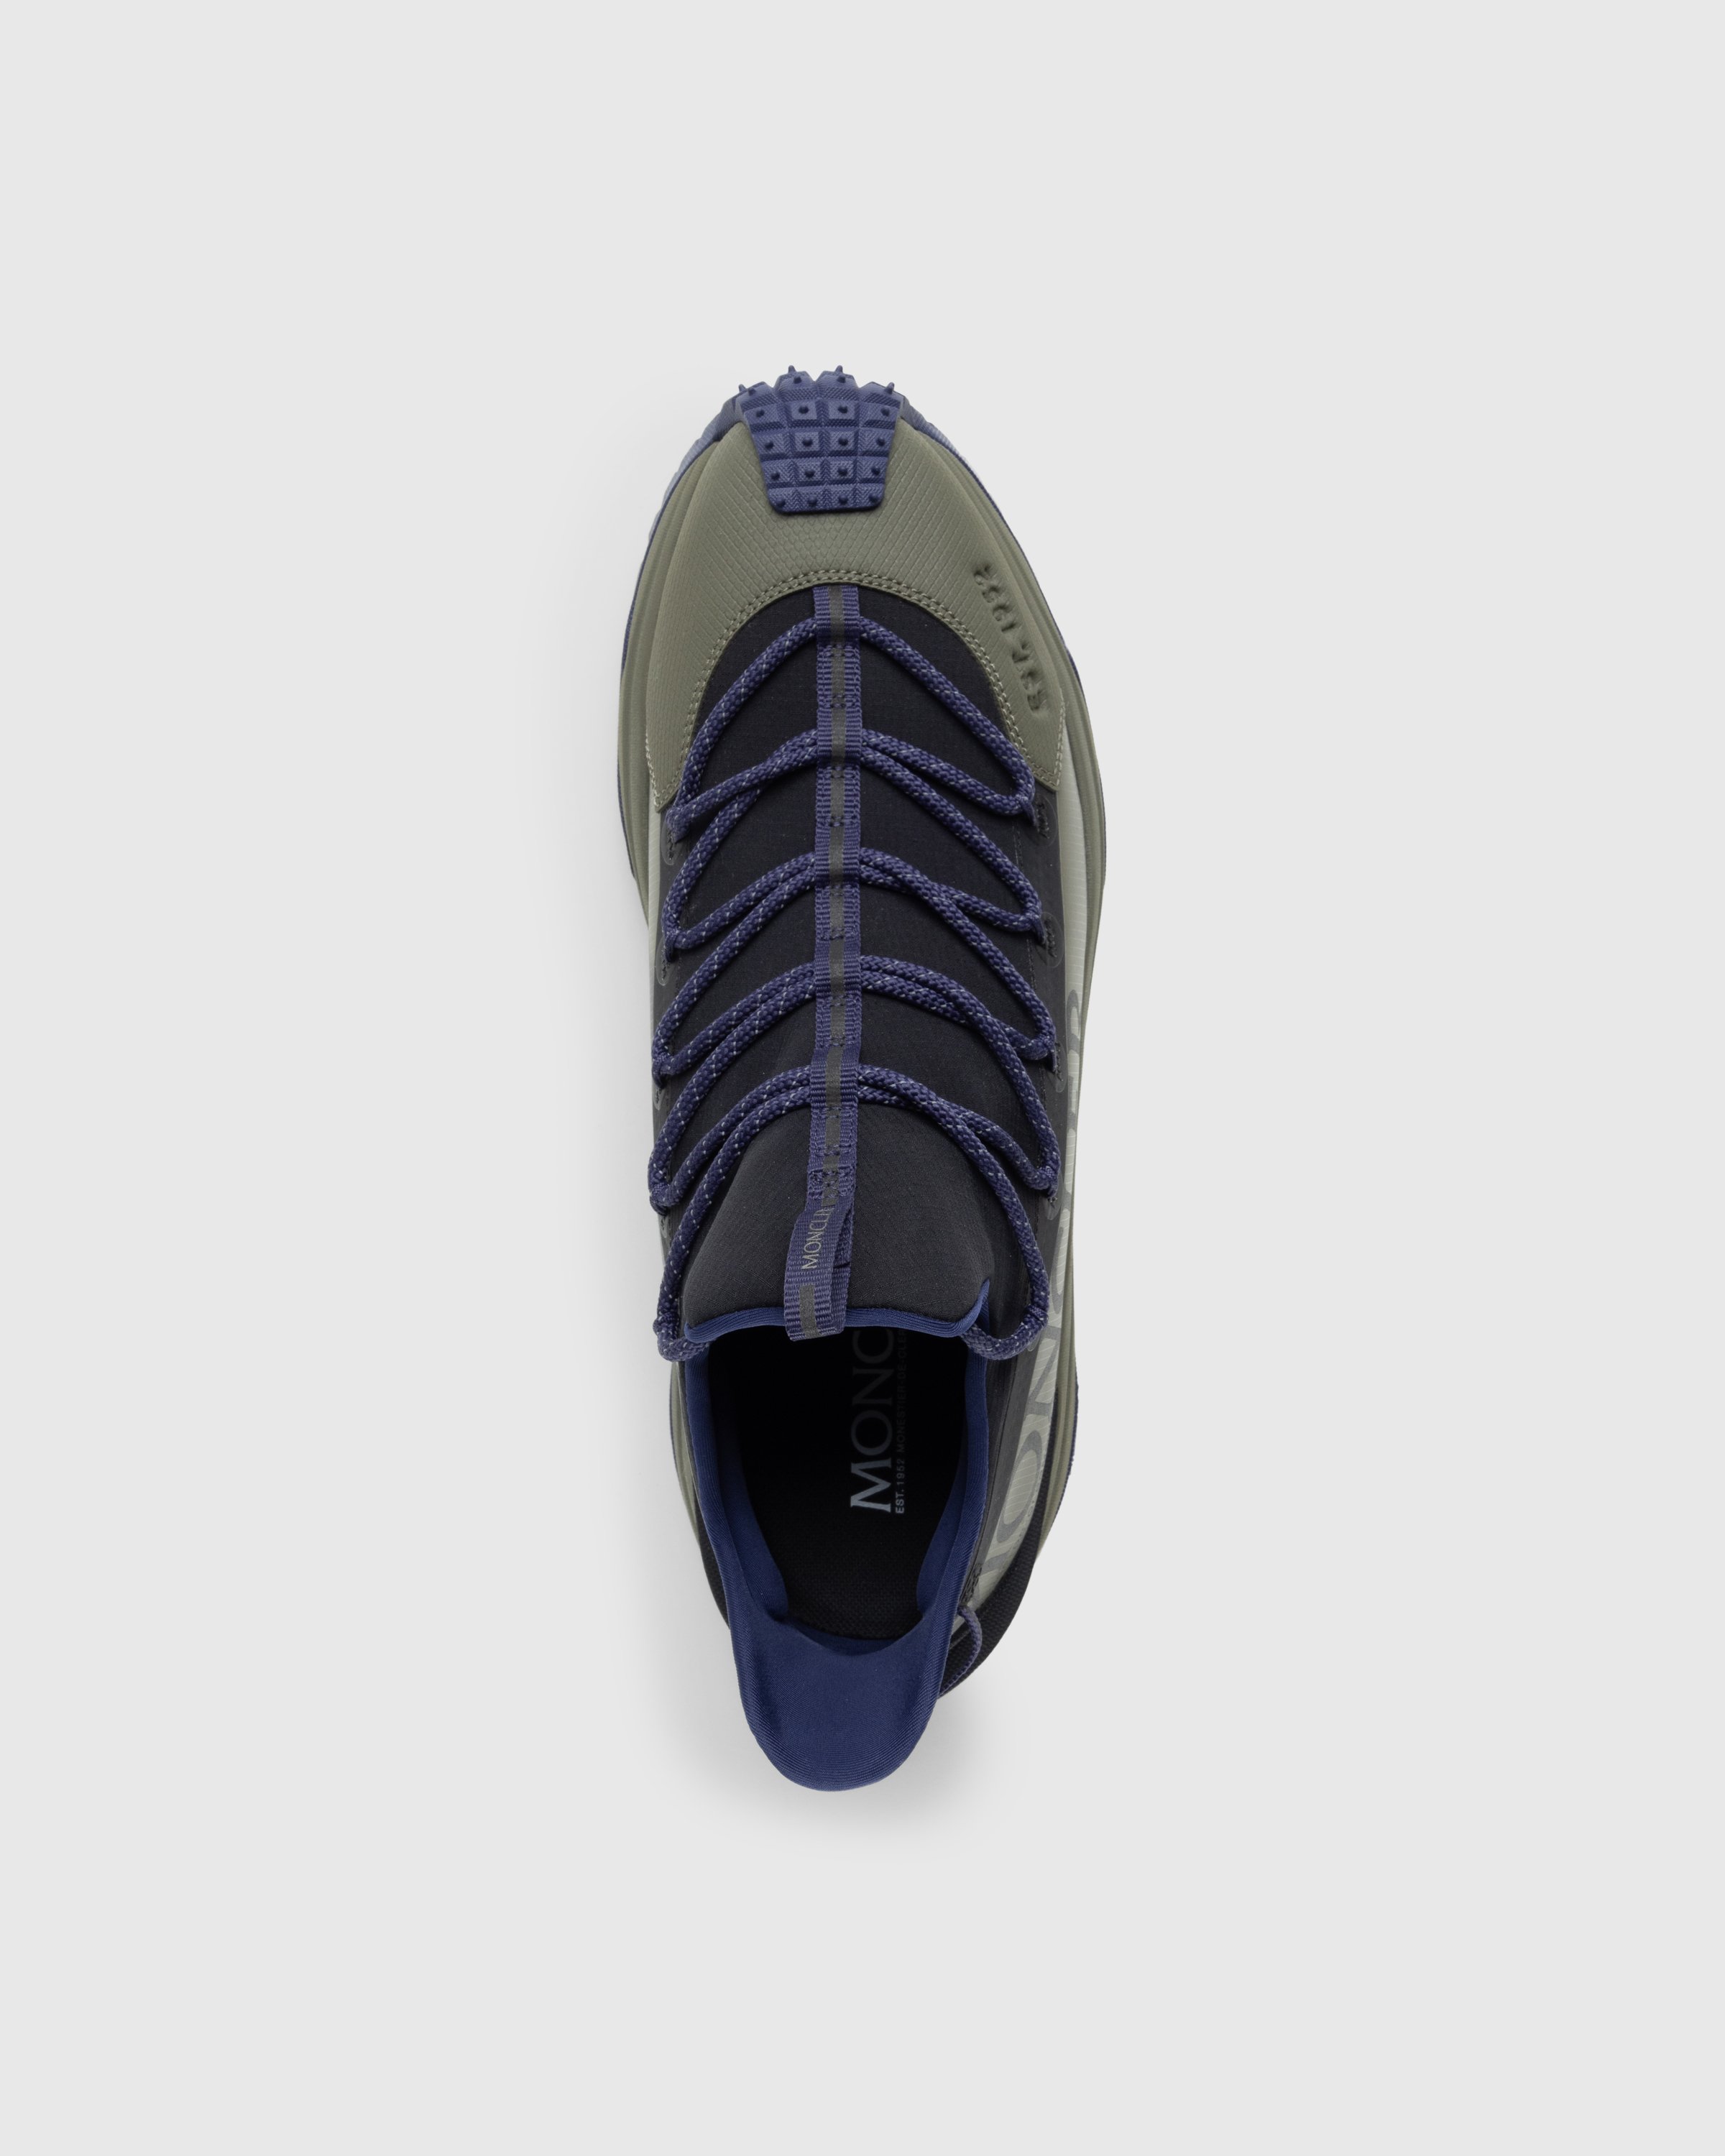 Moncler - Trailgrip Lite 2 Sneakers Blue/Olive Green - Footwear - Blue - Image 5